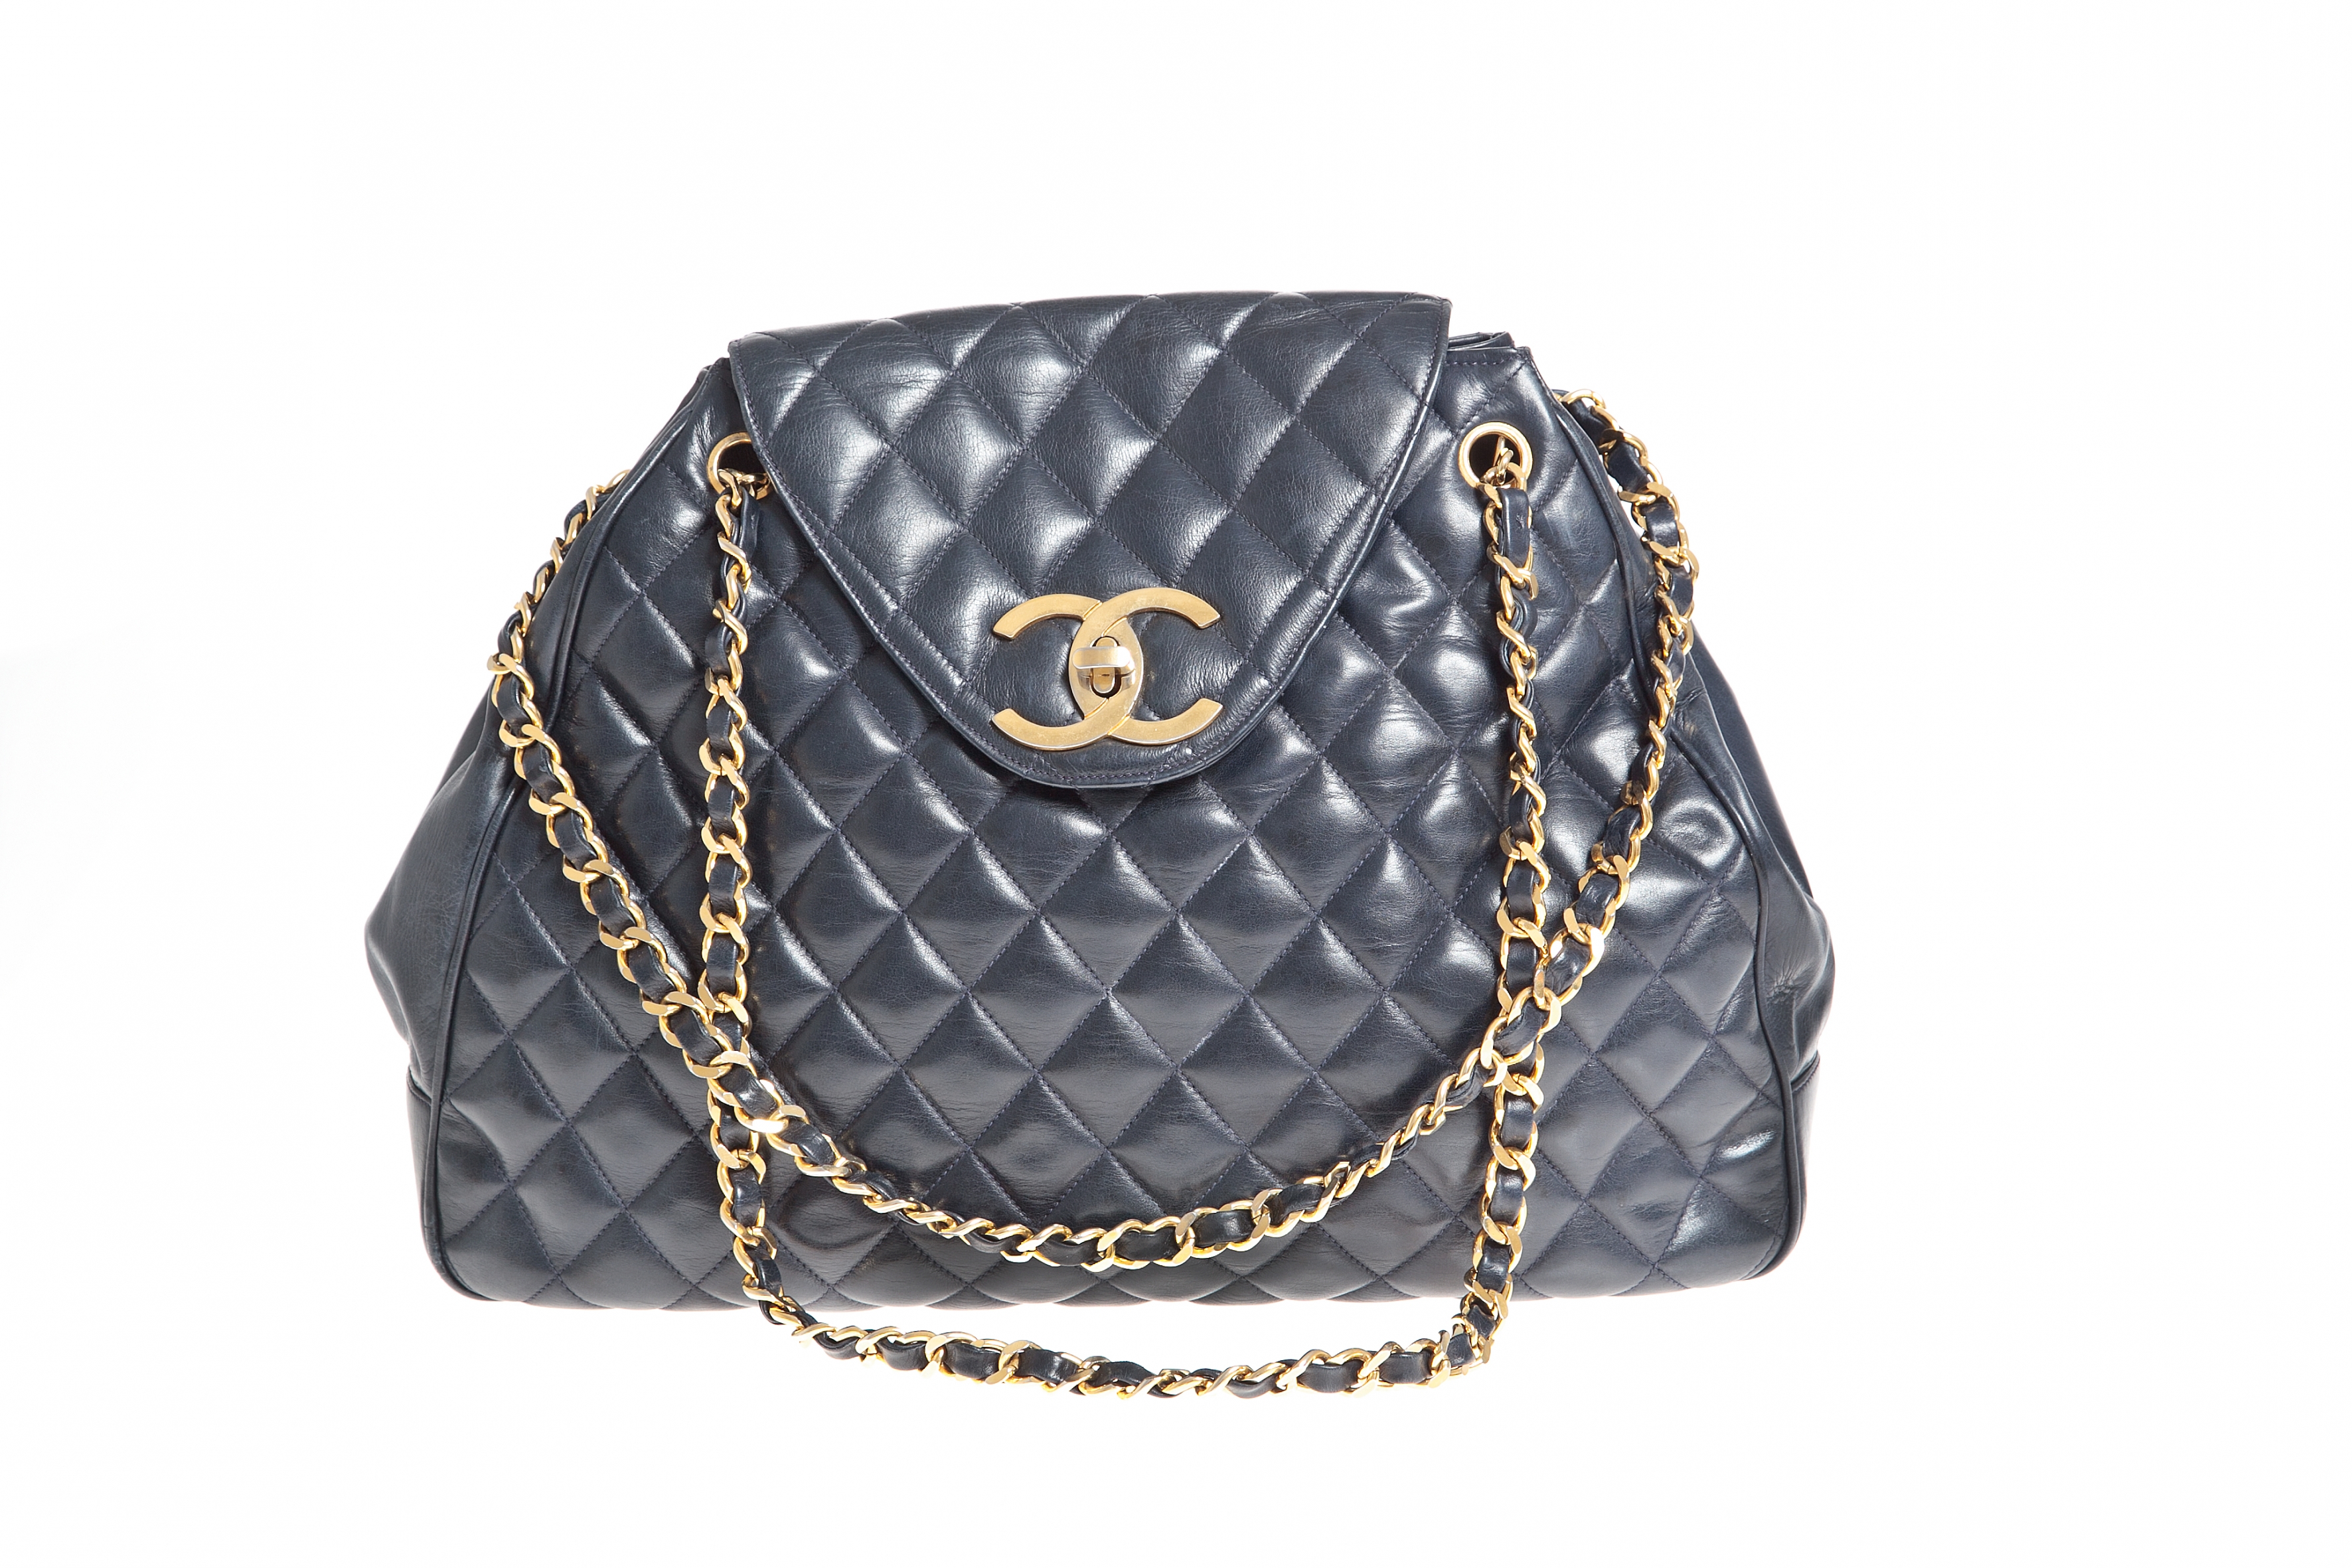 Chanel dark blue trapezoid handbag